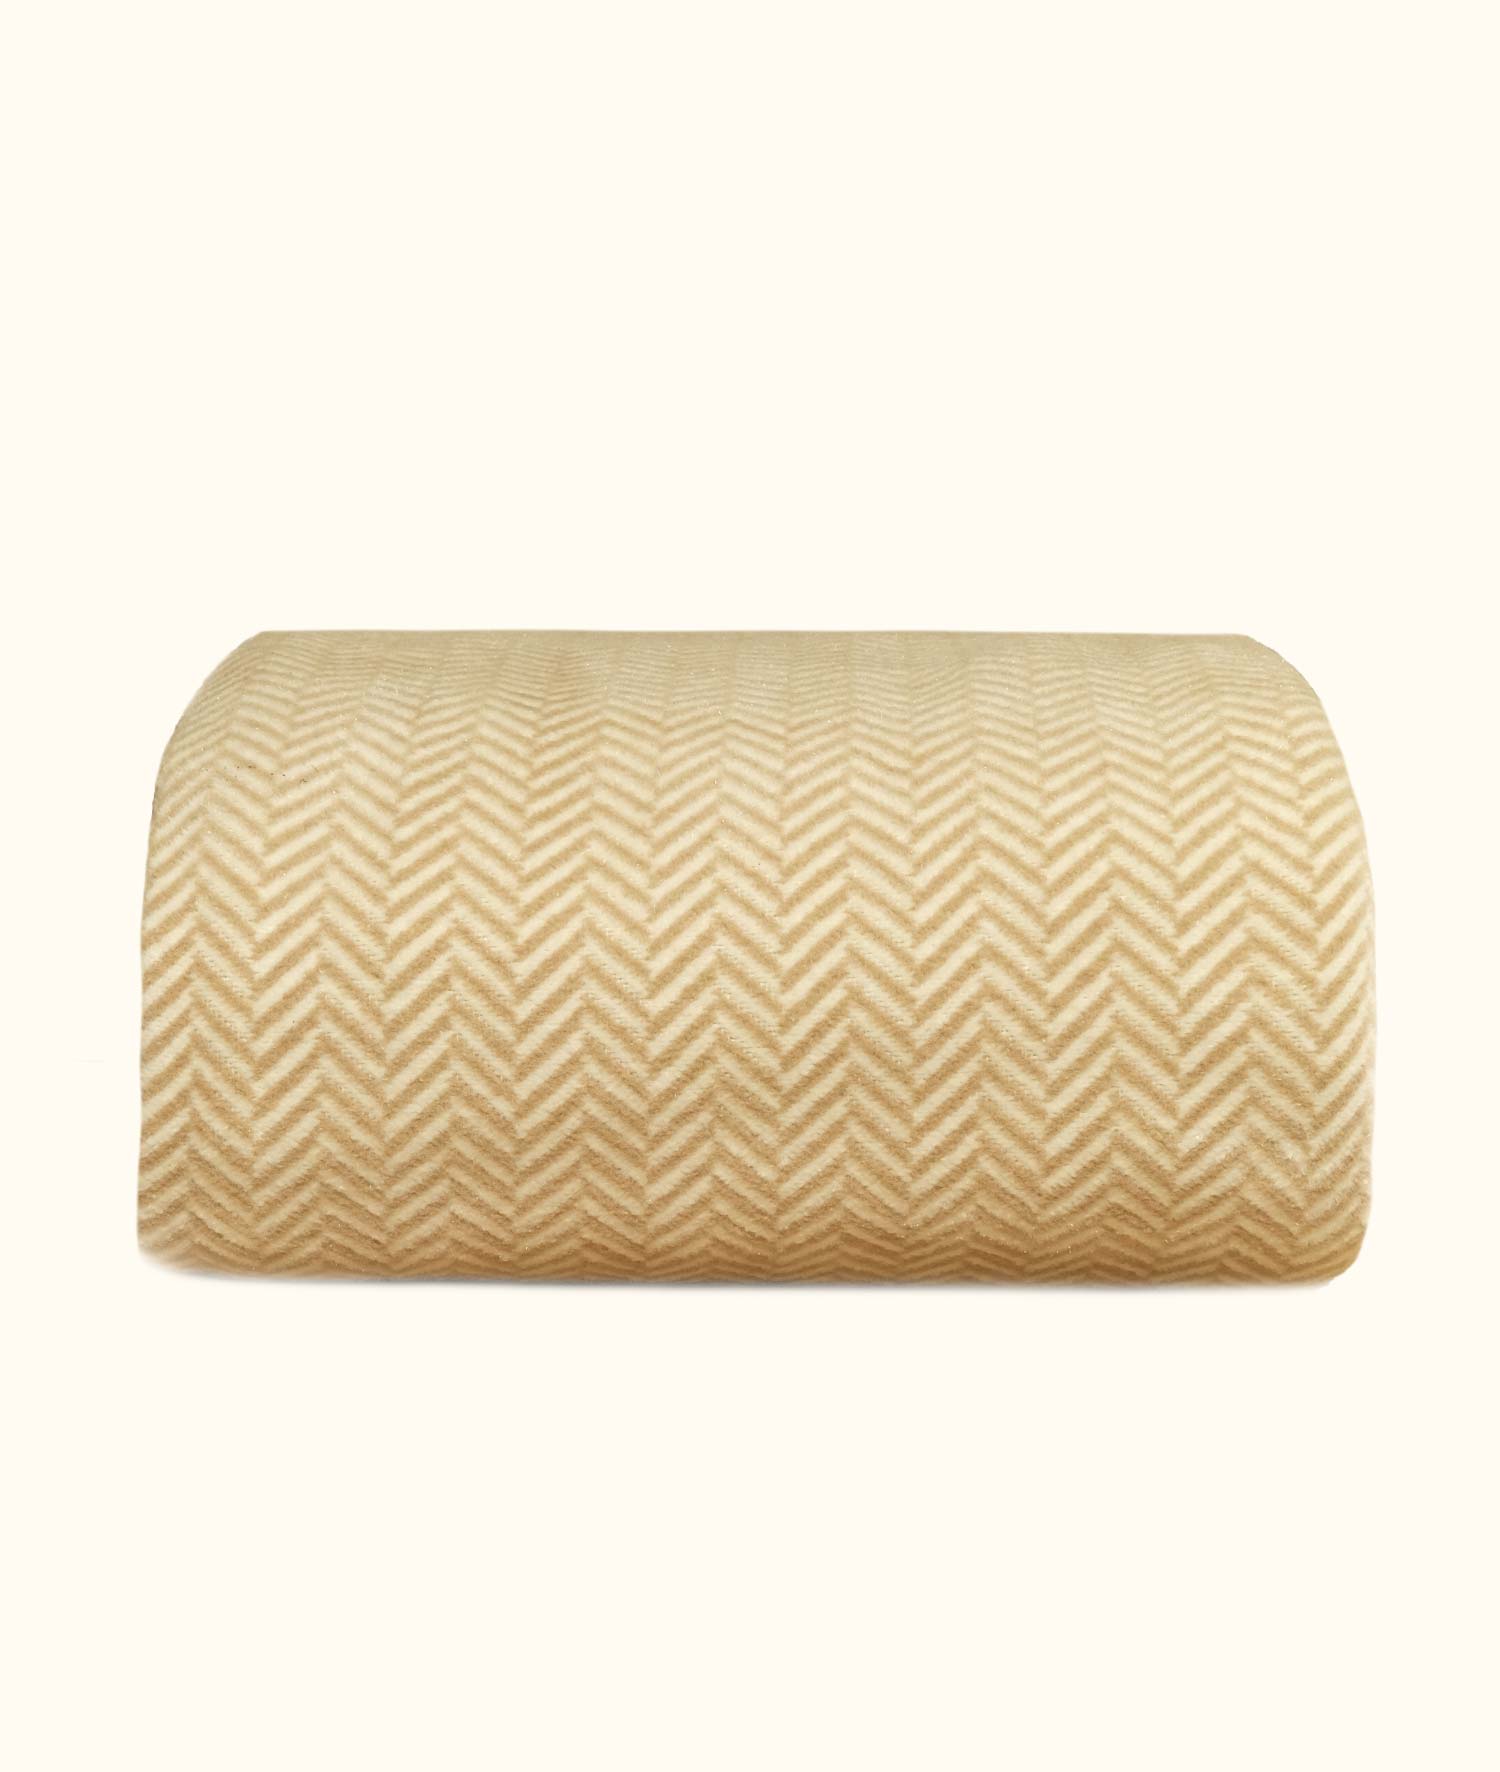 Twin Blanket Soft Cotton Single Blanket Brown Cream 150 x 200 5016A